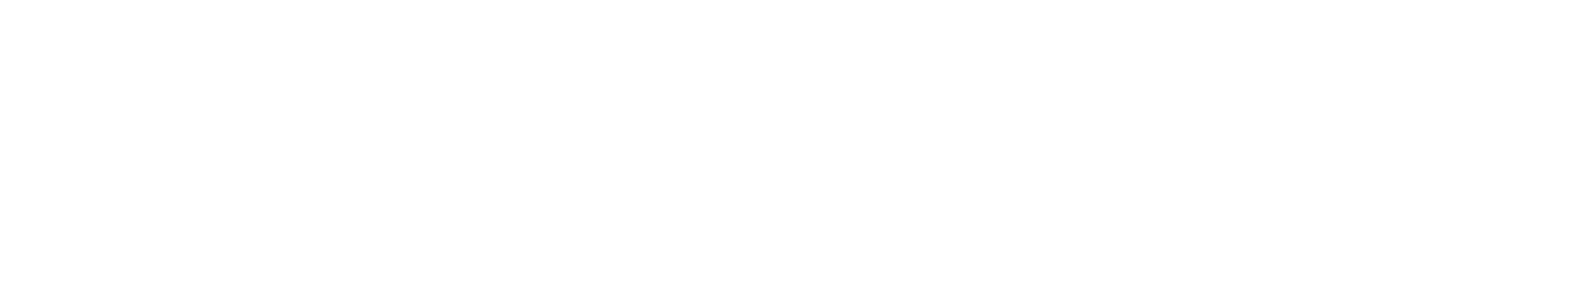 Komatsu logo grand pour les fonds sombres (PNG transparent)